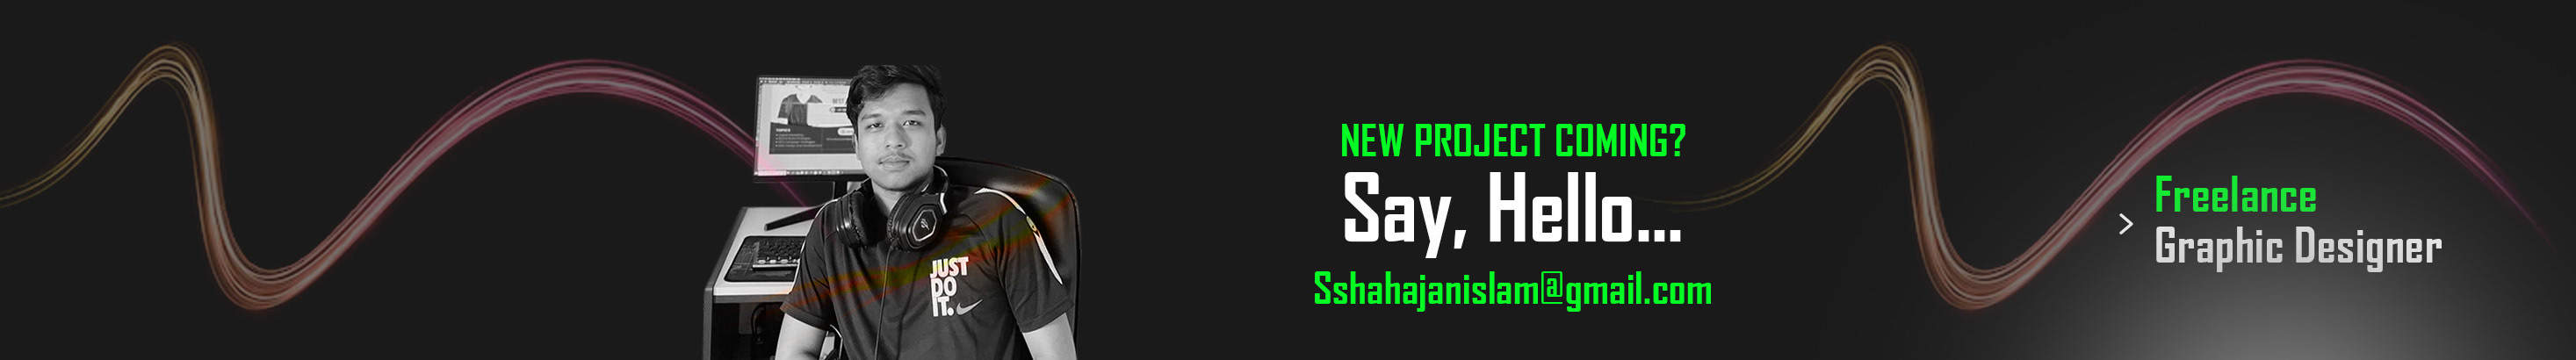 Shahajan Islam's profile banner